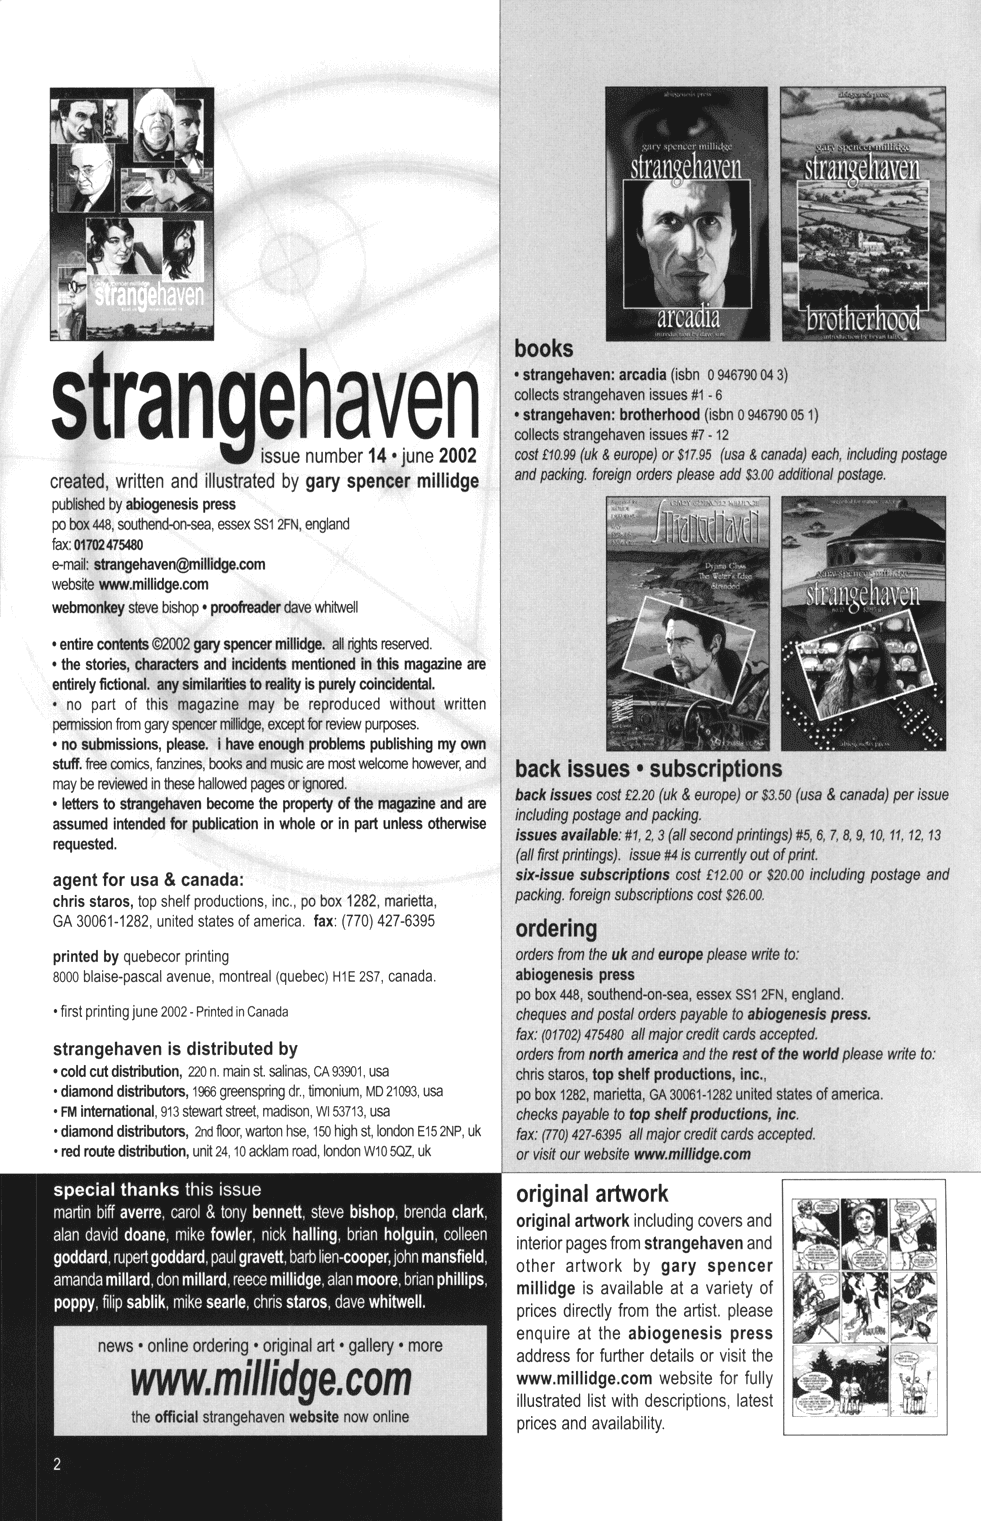 Read online Strangehaven comic -  Issue #14 - 2